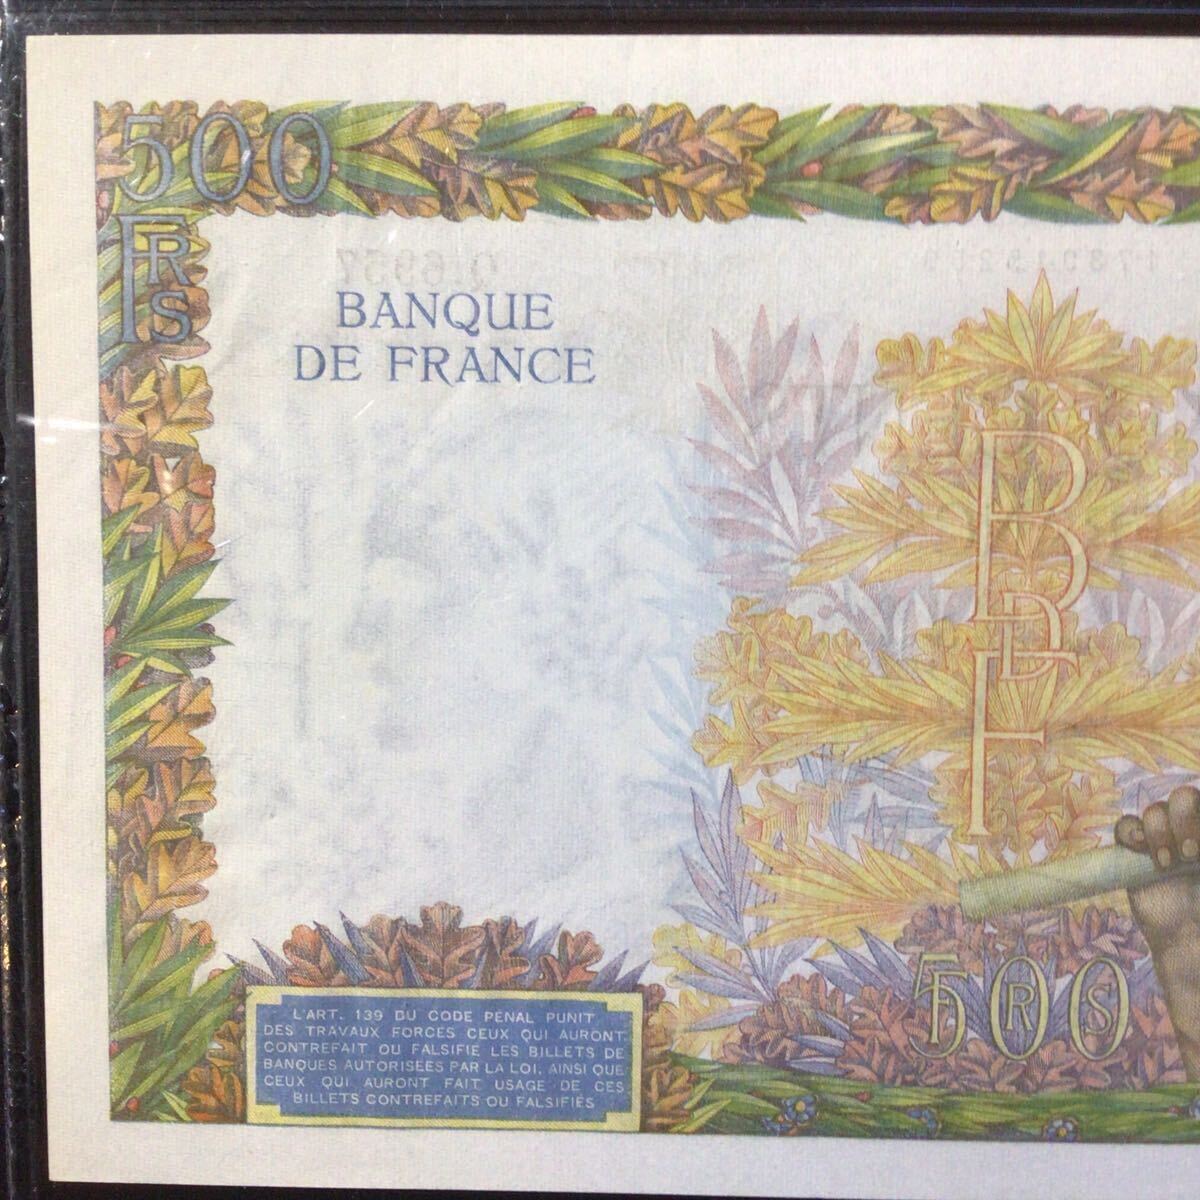 World Banknote Grading FRANCE《Banque de France》500 Francs【1942】『PMG Grading About Uncirculated 55 EPQ』_画像6